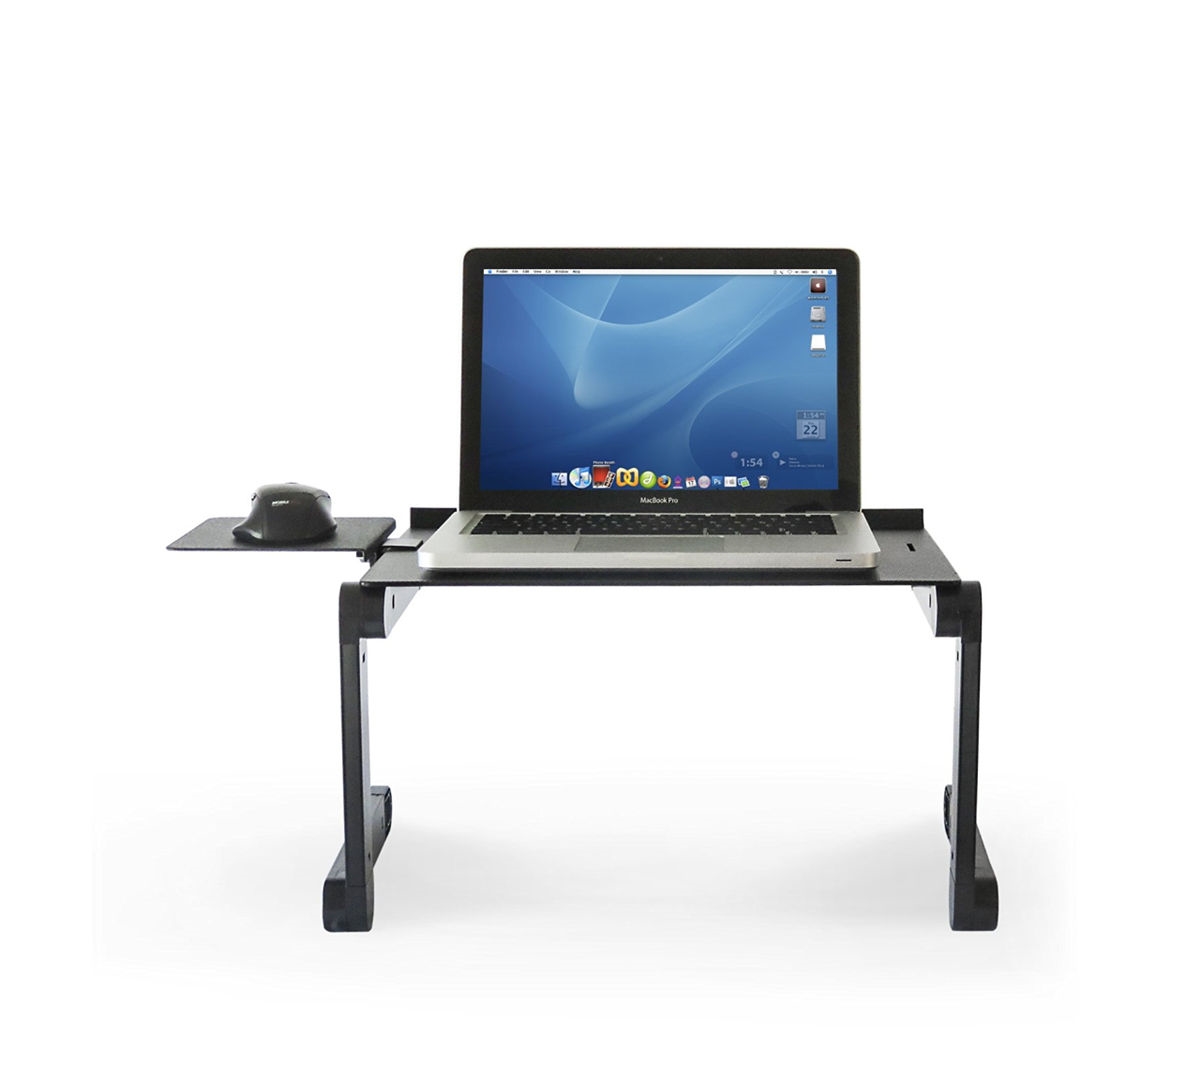 Adjustable Aluminum Computer Cooling Pad Laptop Desk Ergonomic Tv Bed Lap  Desk Tray Computer Laptop Desk Stand